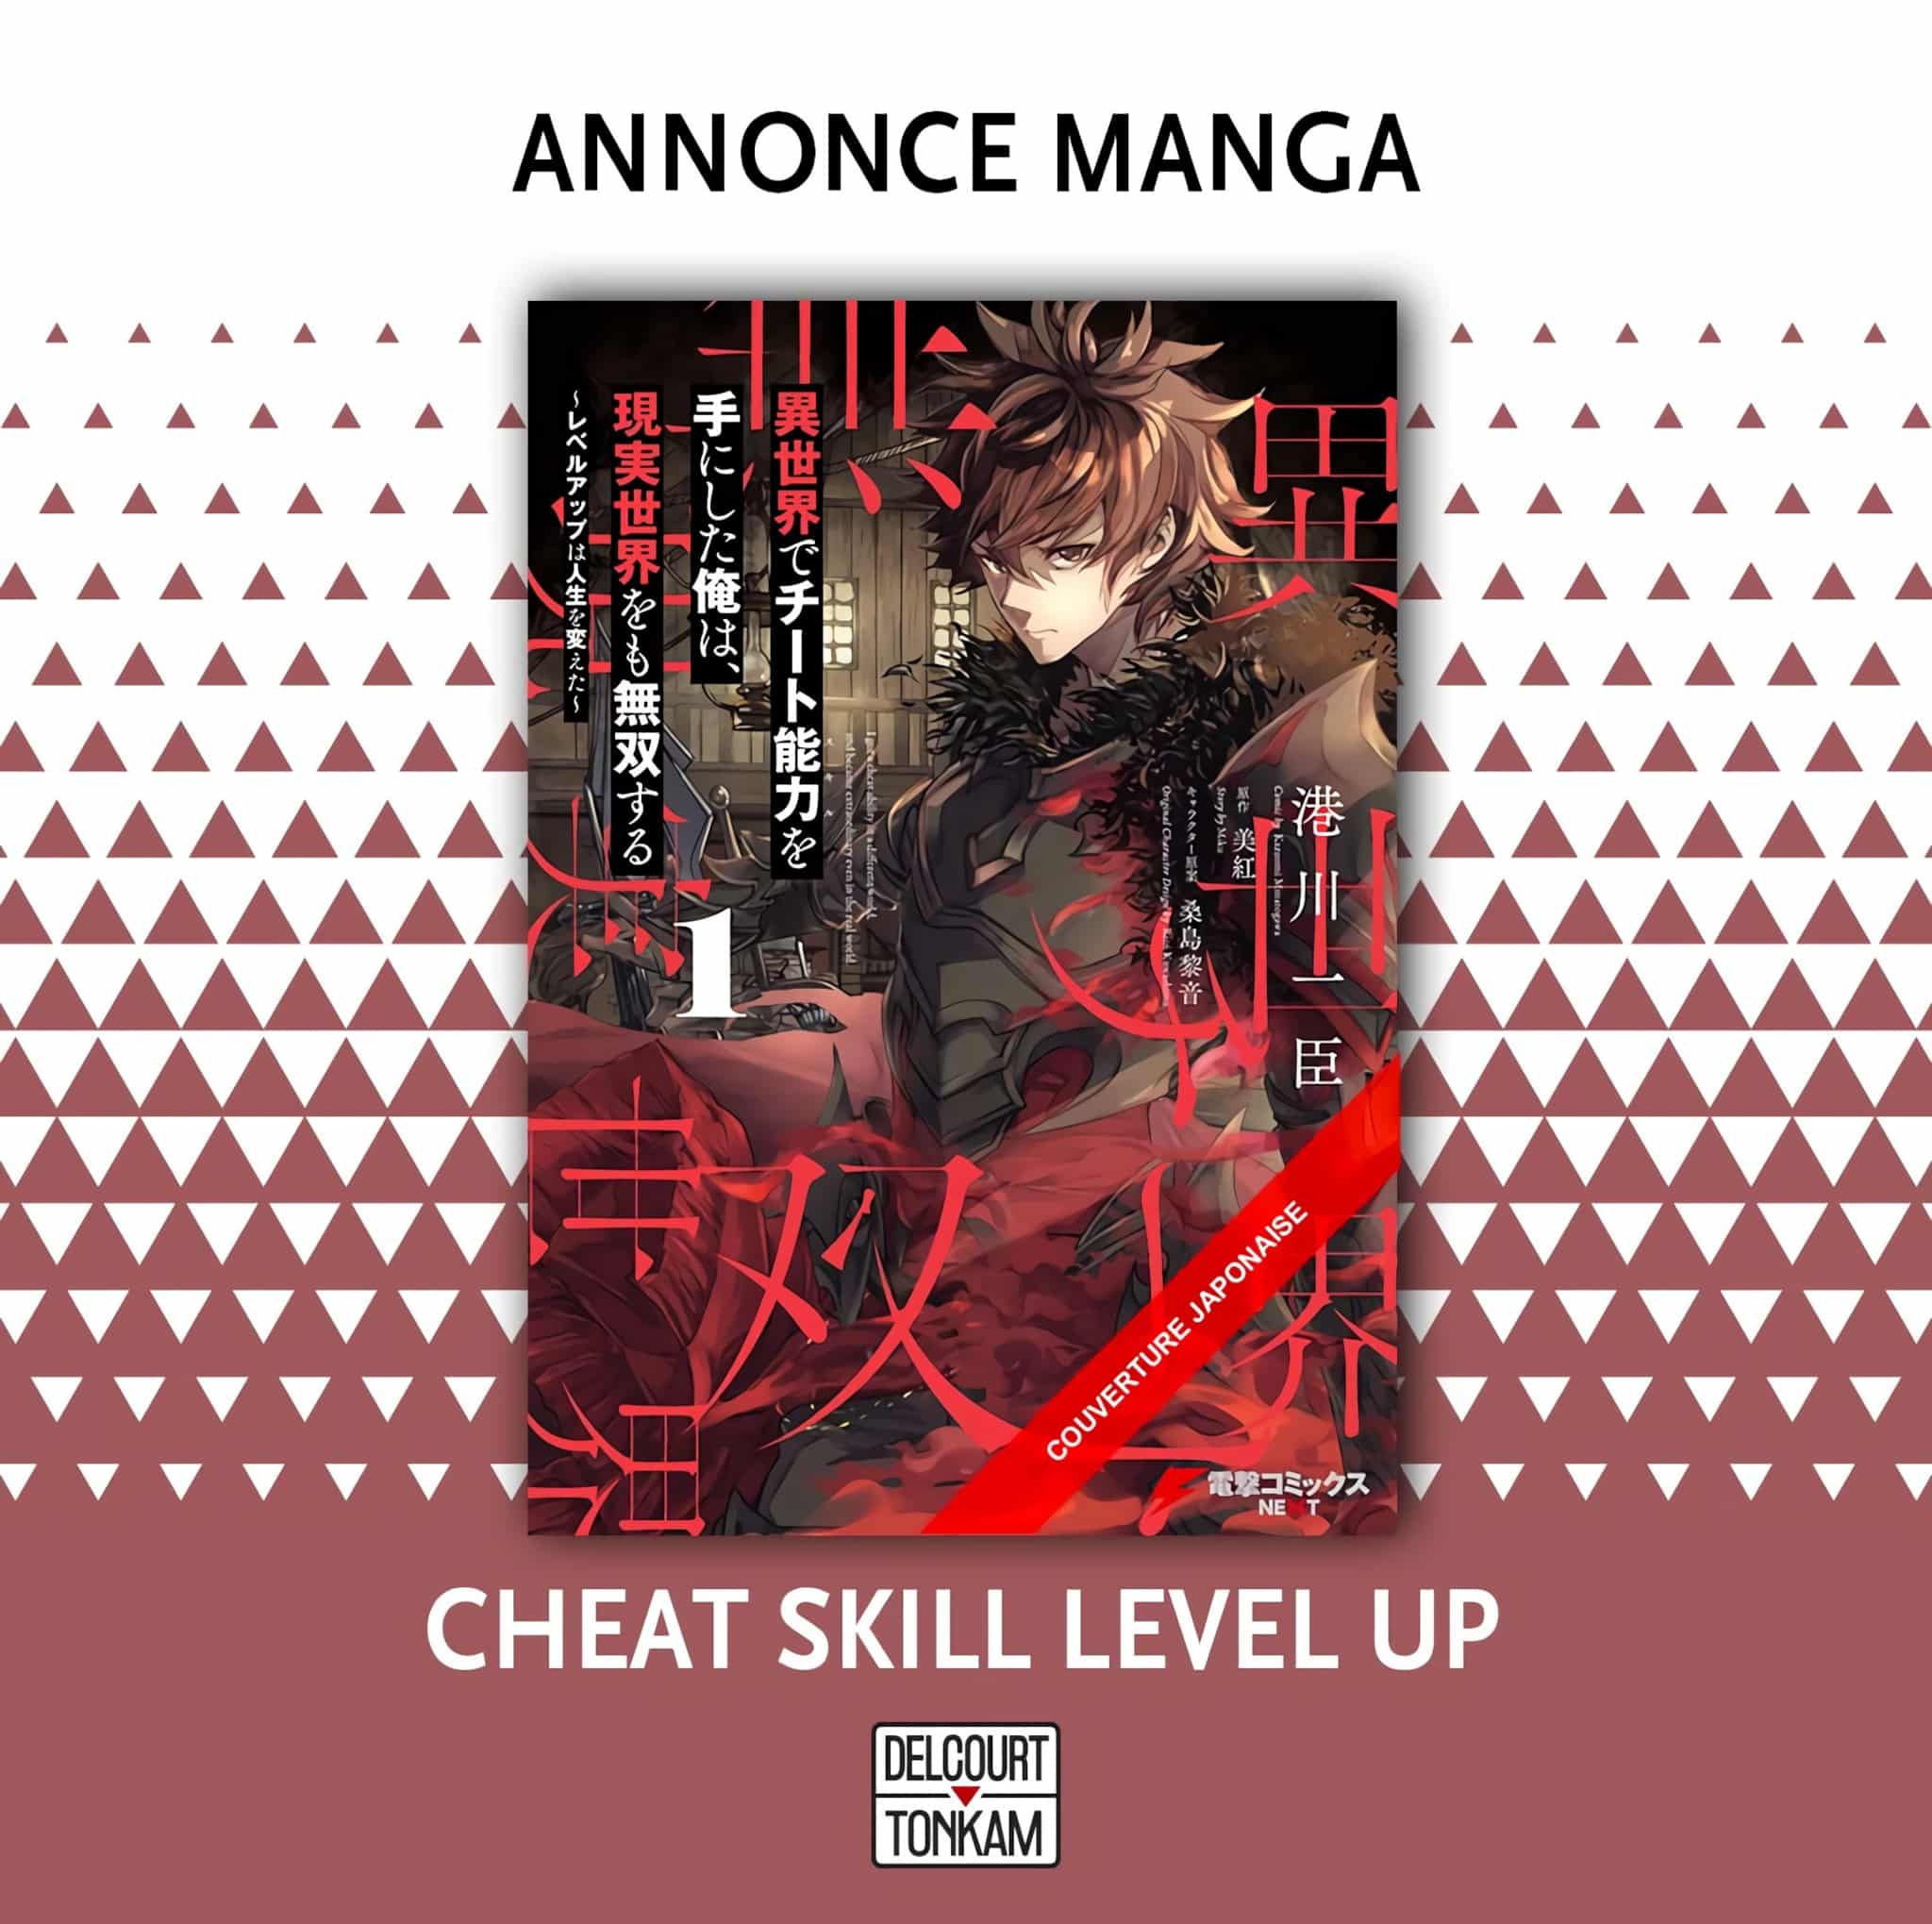 Annonce de la date de sortie en France du manga Cheat Skill Level Up